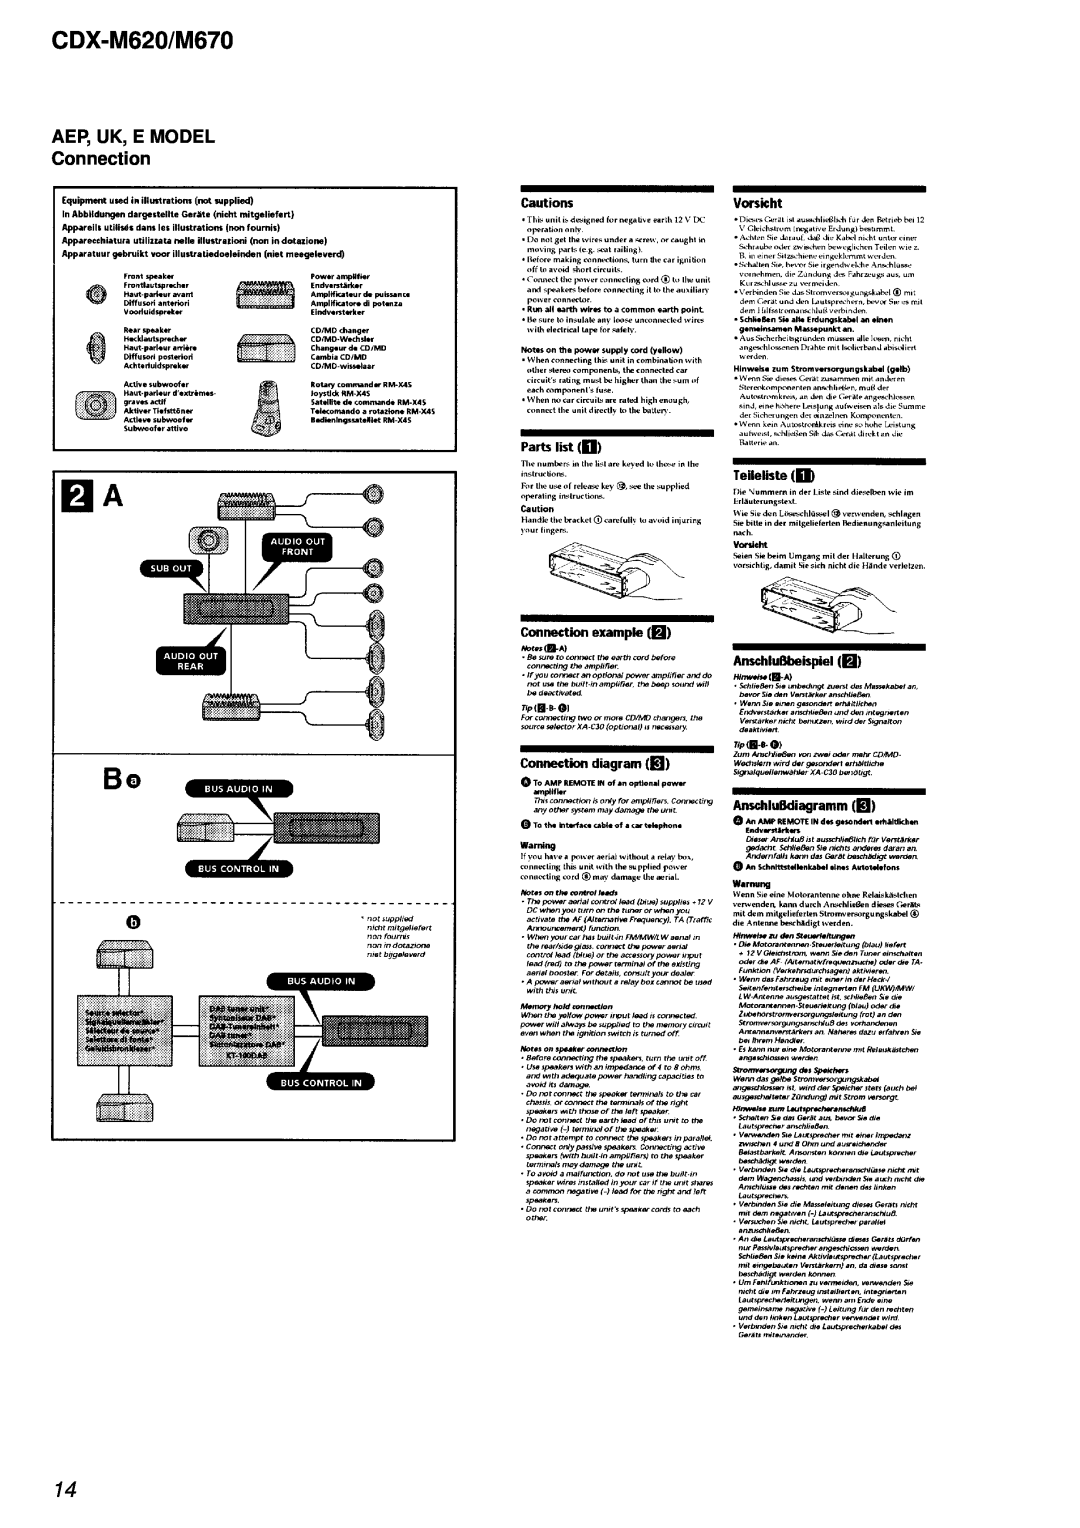 Sony Ericsson service manual AEP, UK, E MODEL Connection, CDX-M620/M670 